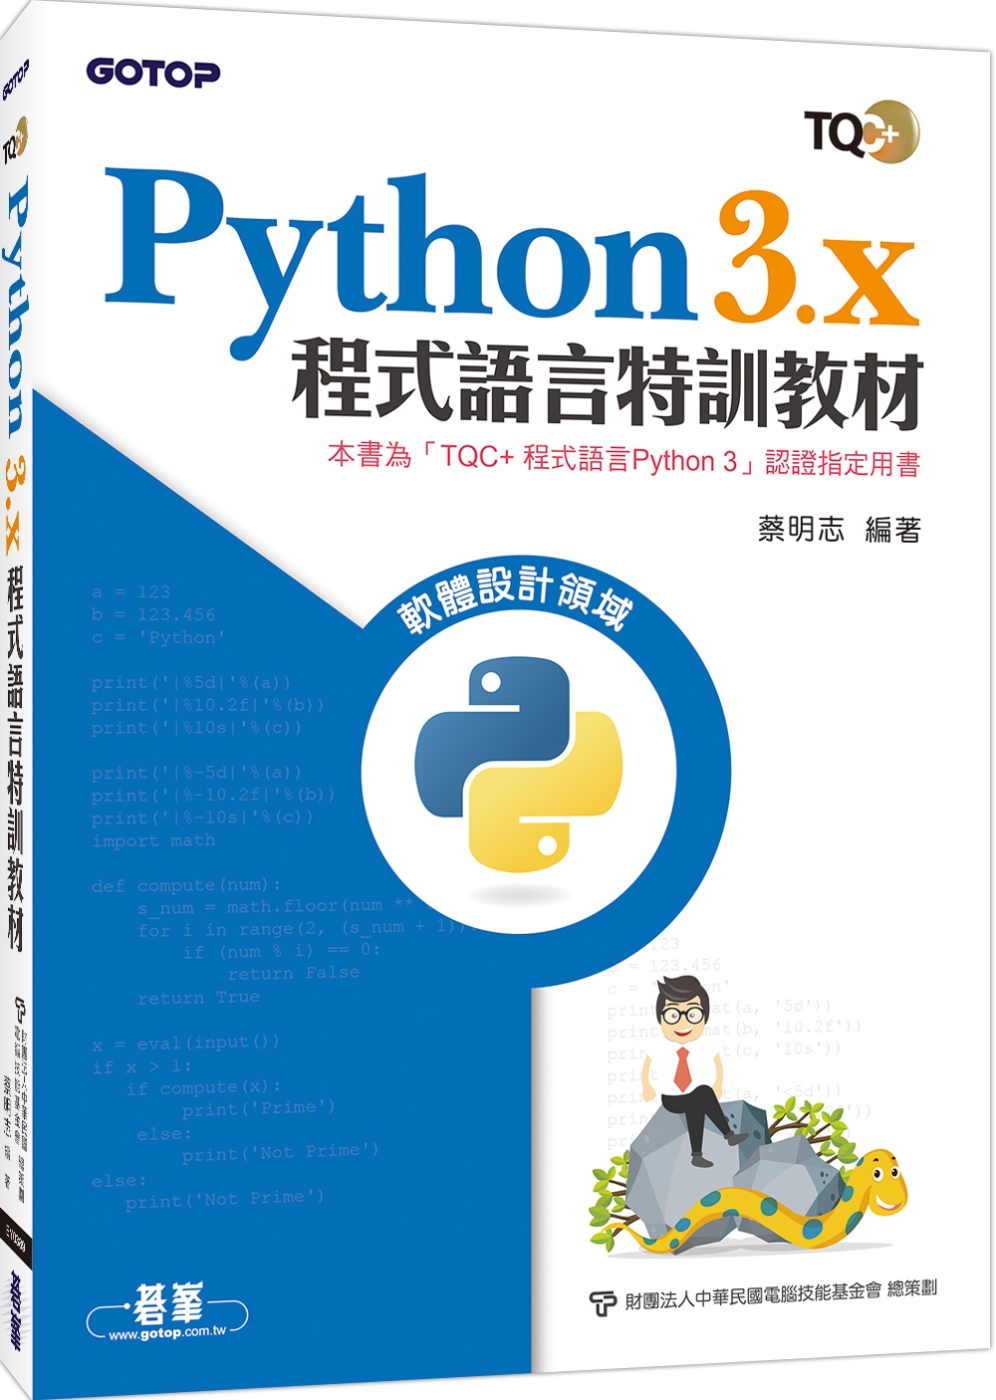 Python 3.x 程式語言特訓教材